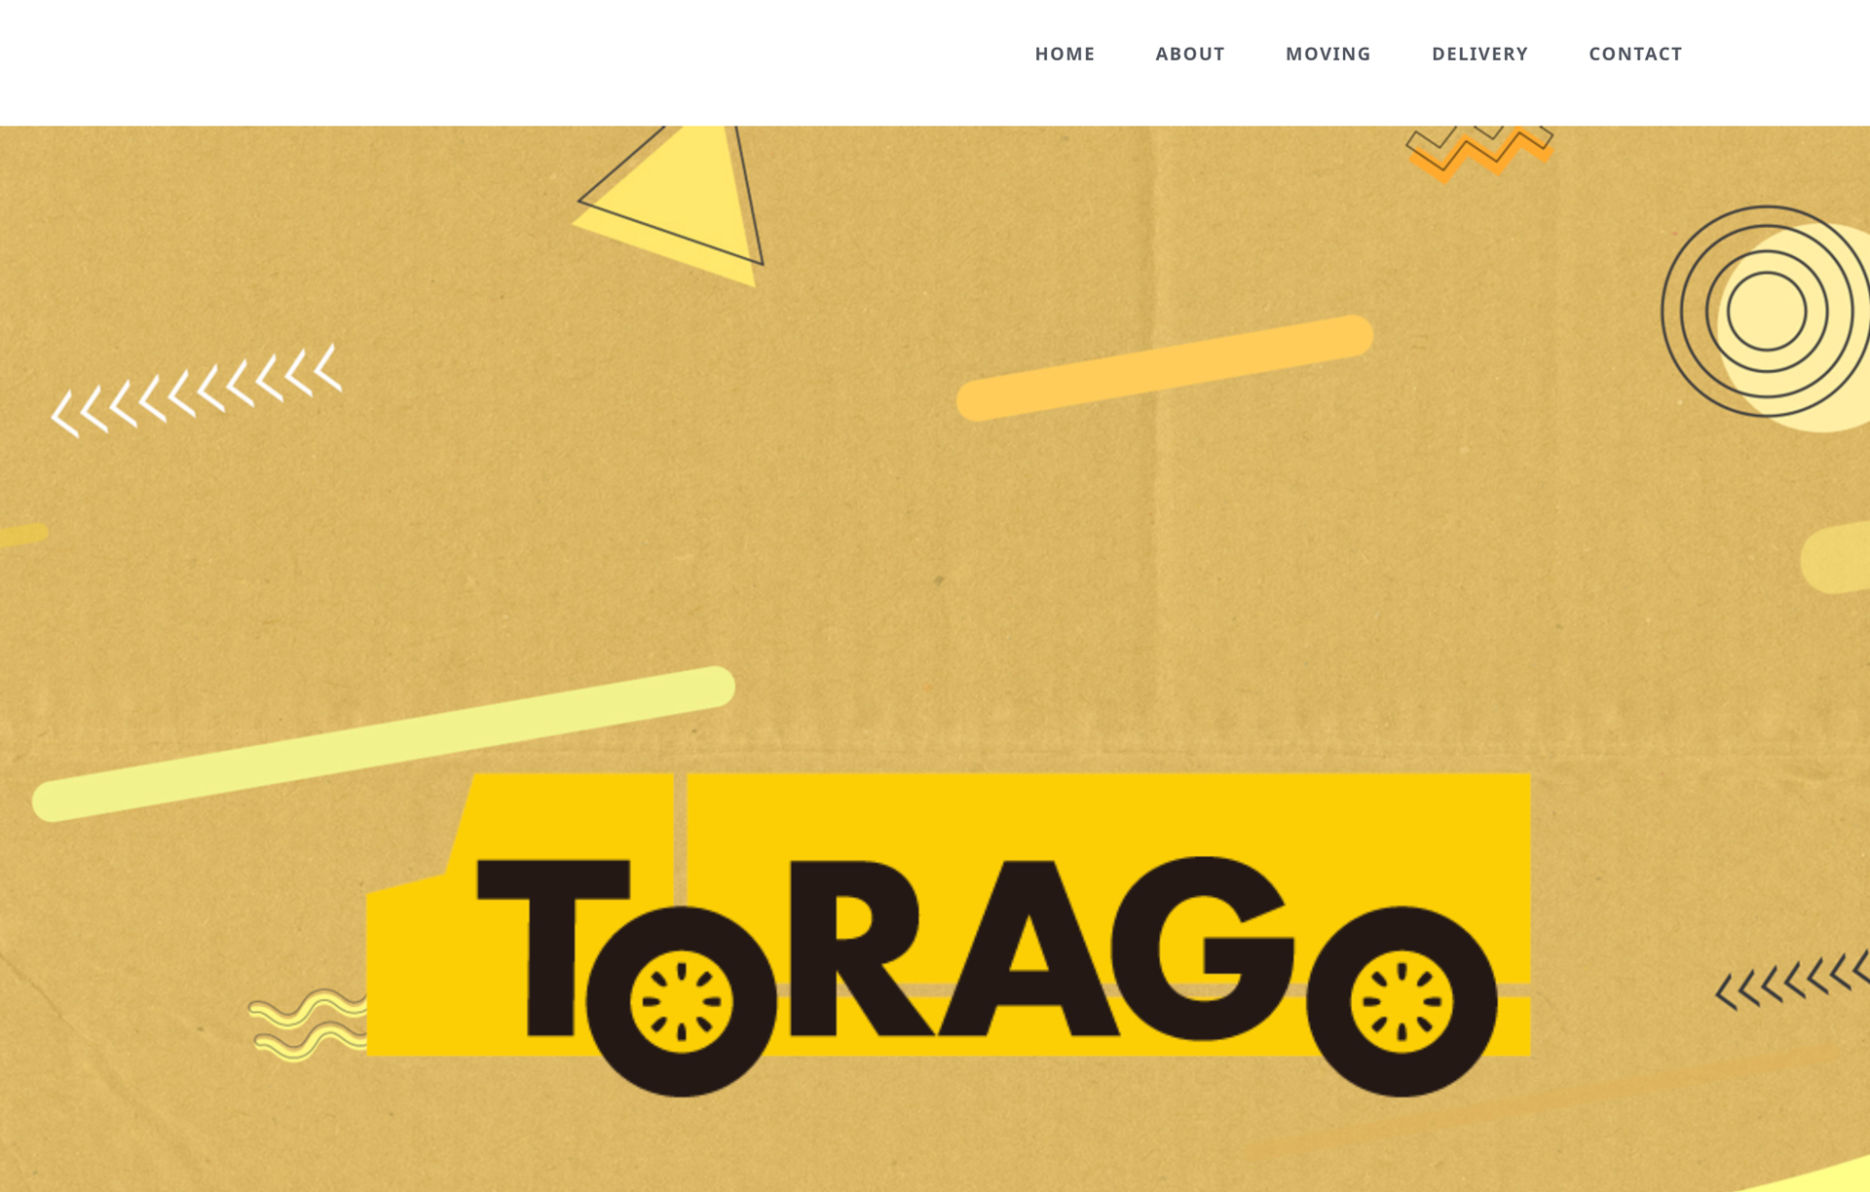 torago 6 - ホームページ制作事例。TORAGO株式会社様。